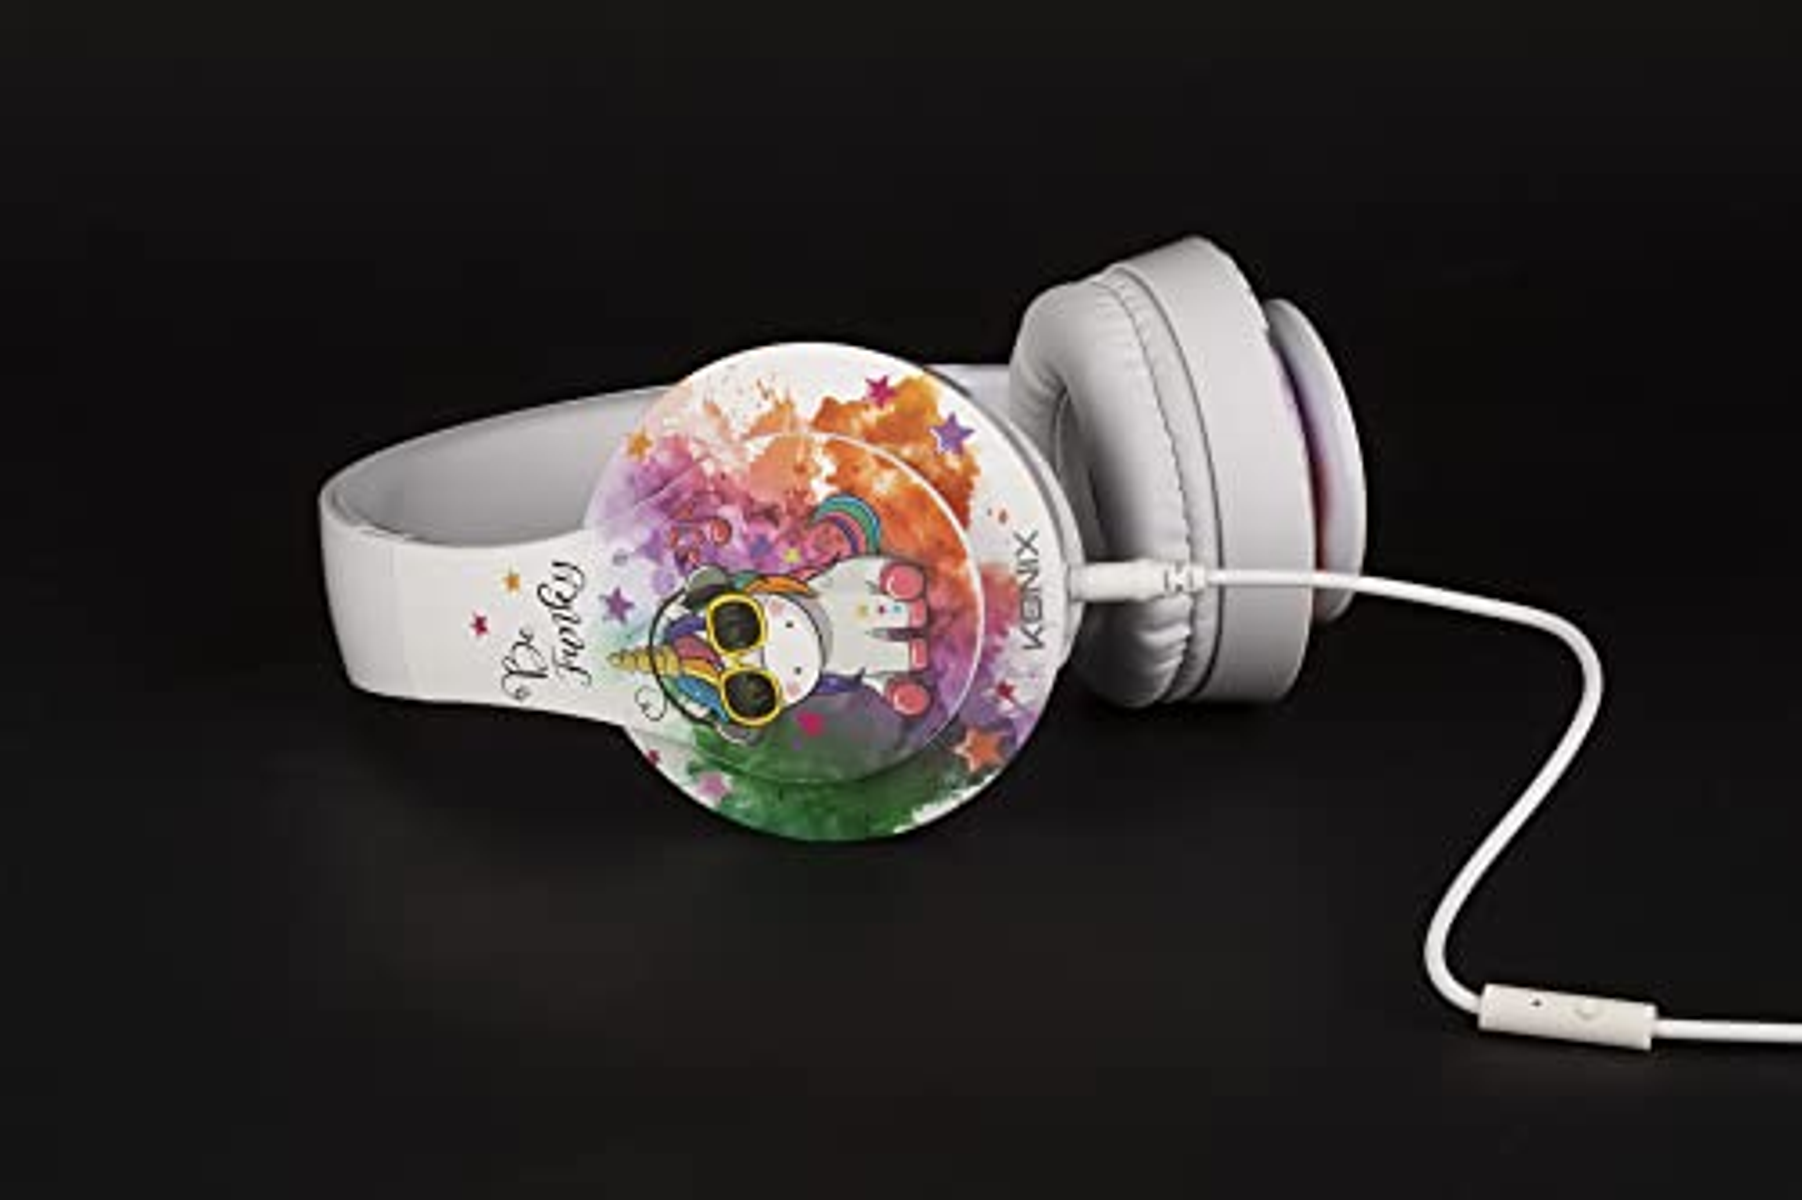 KONIX 28089 UNIK HEADSET On-ear FUNKY Headset SW, Gaming BE Mehrfarbig